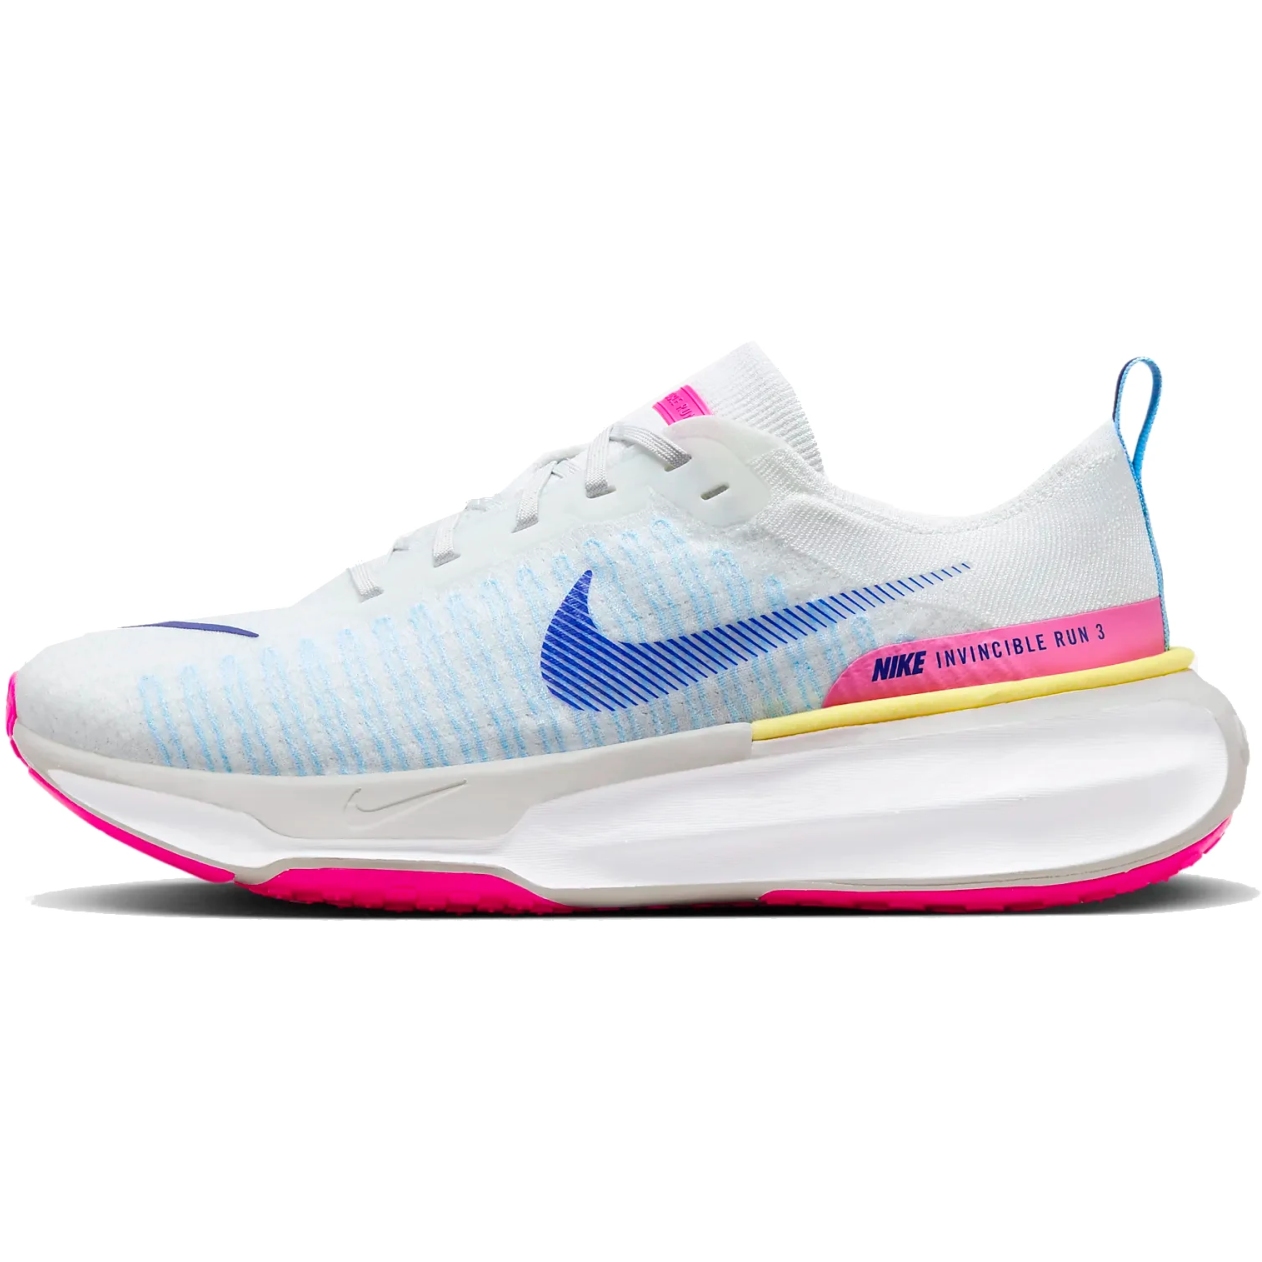 Produktbild von Nike Invincible 3 Straßenlaufschuhe Herren - white/photon dust/fierce pink/deep royal blue DR2615-105